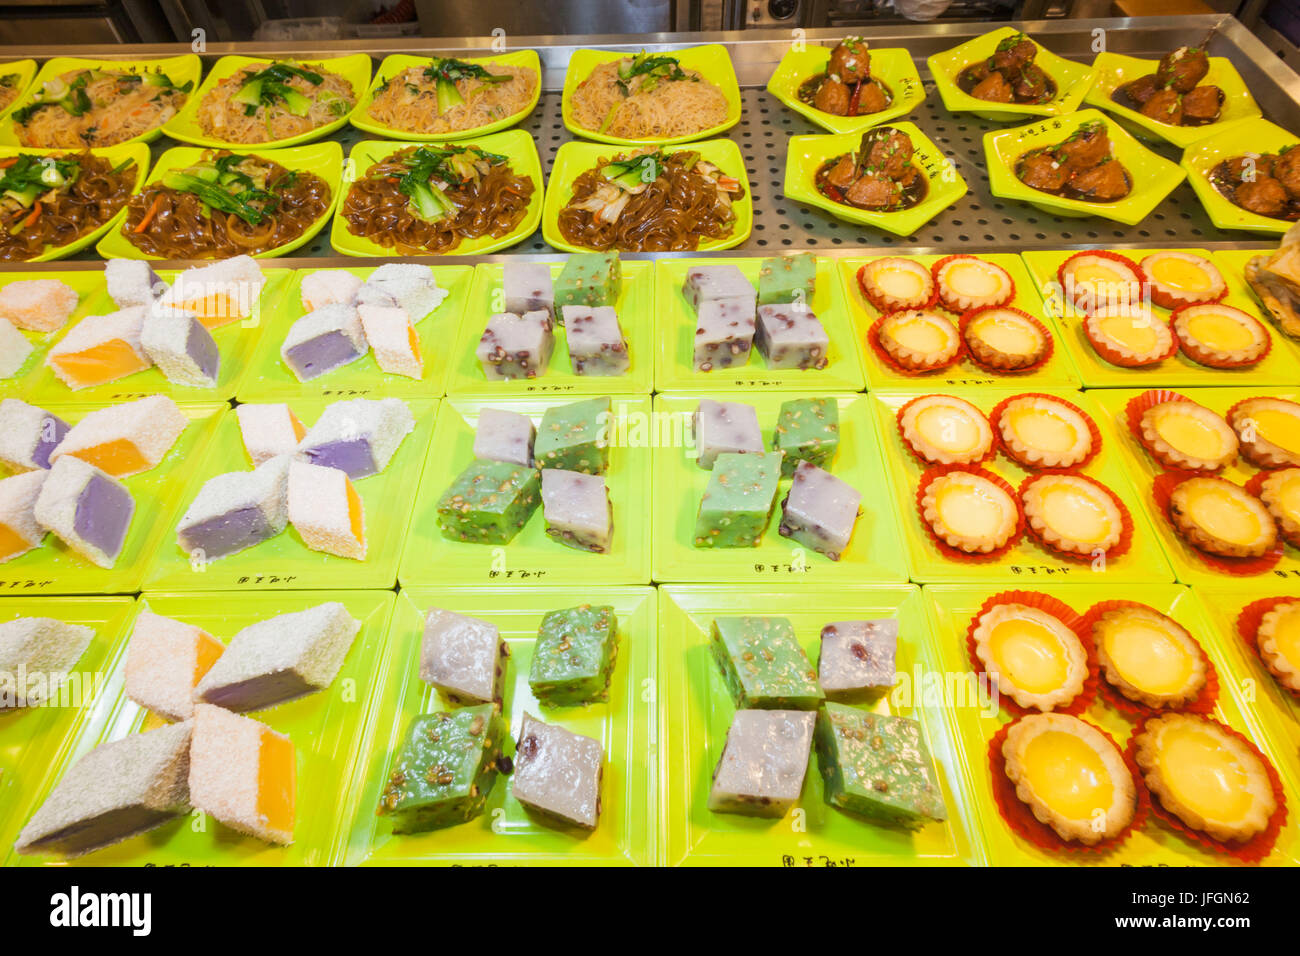 China, Shanghai, Yuyuan Garden, Restaurant Display of Desserts Stock Photo